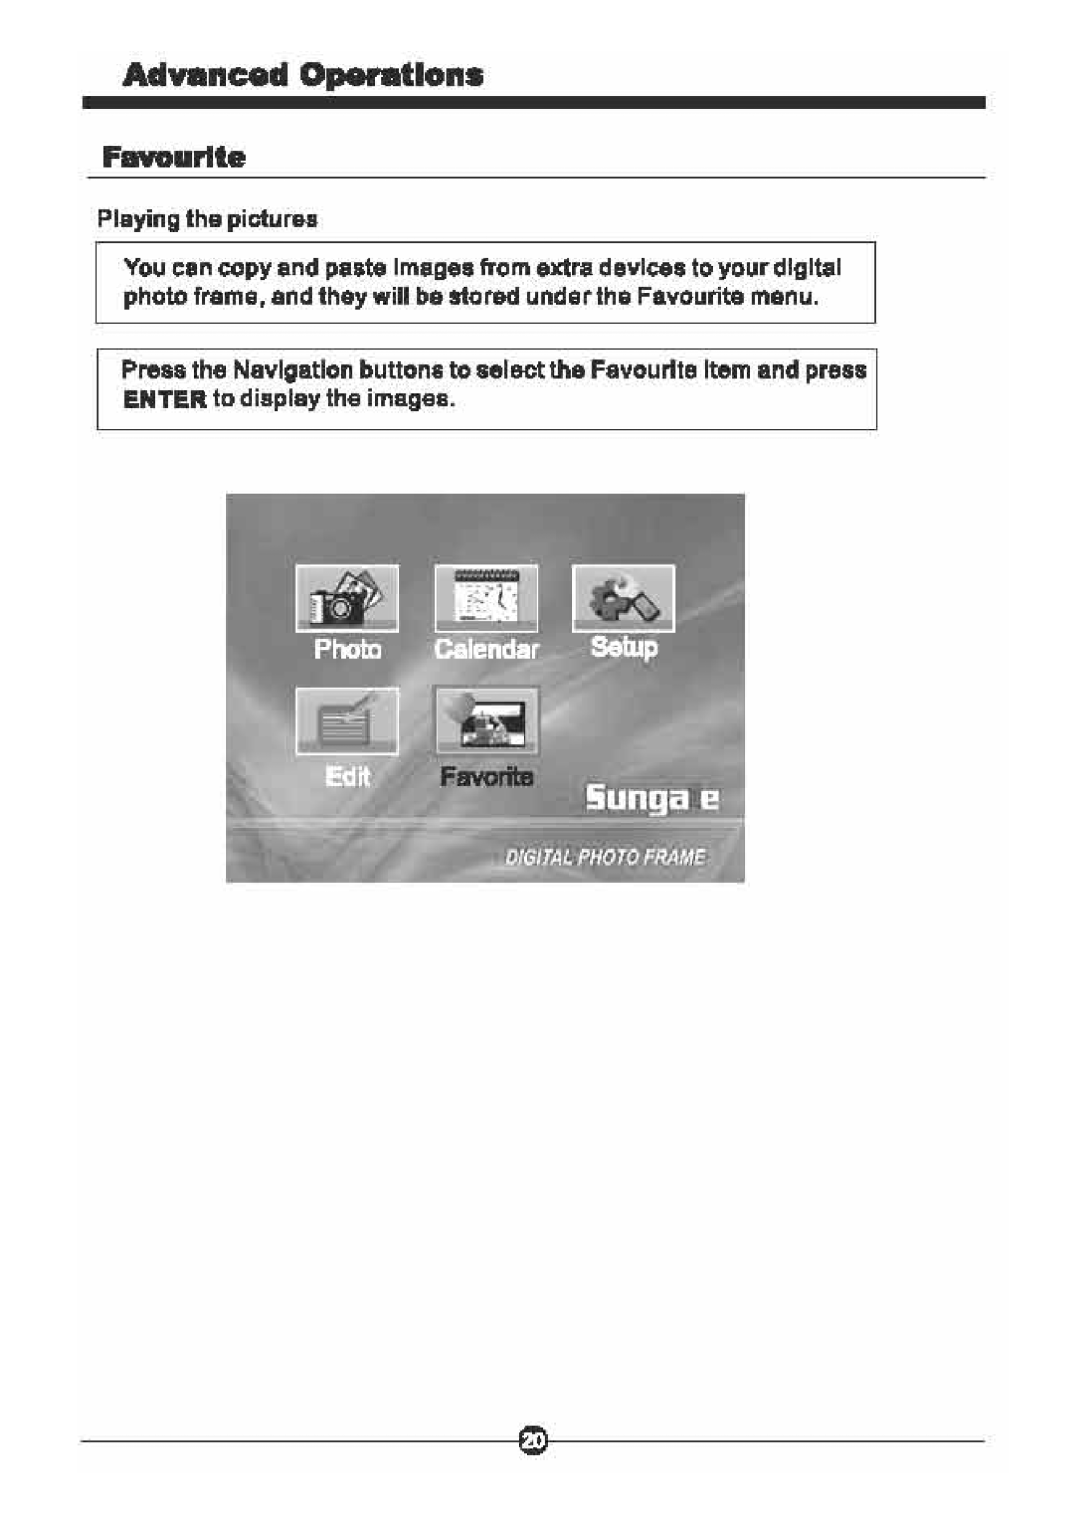 Sungale CD352LD manual 